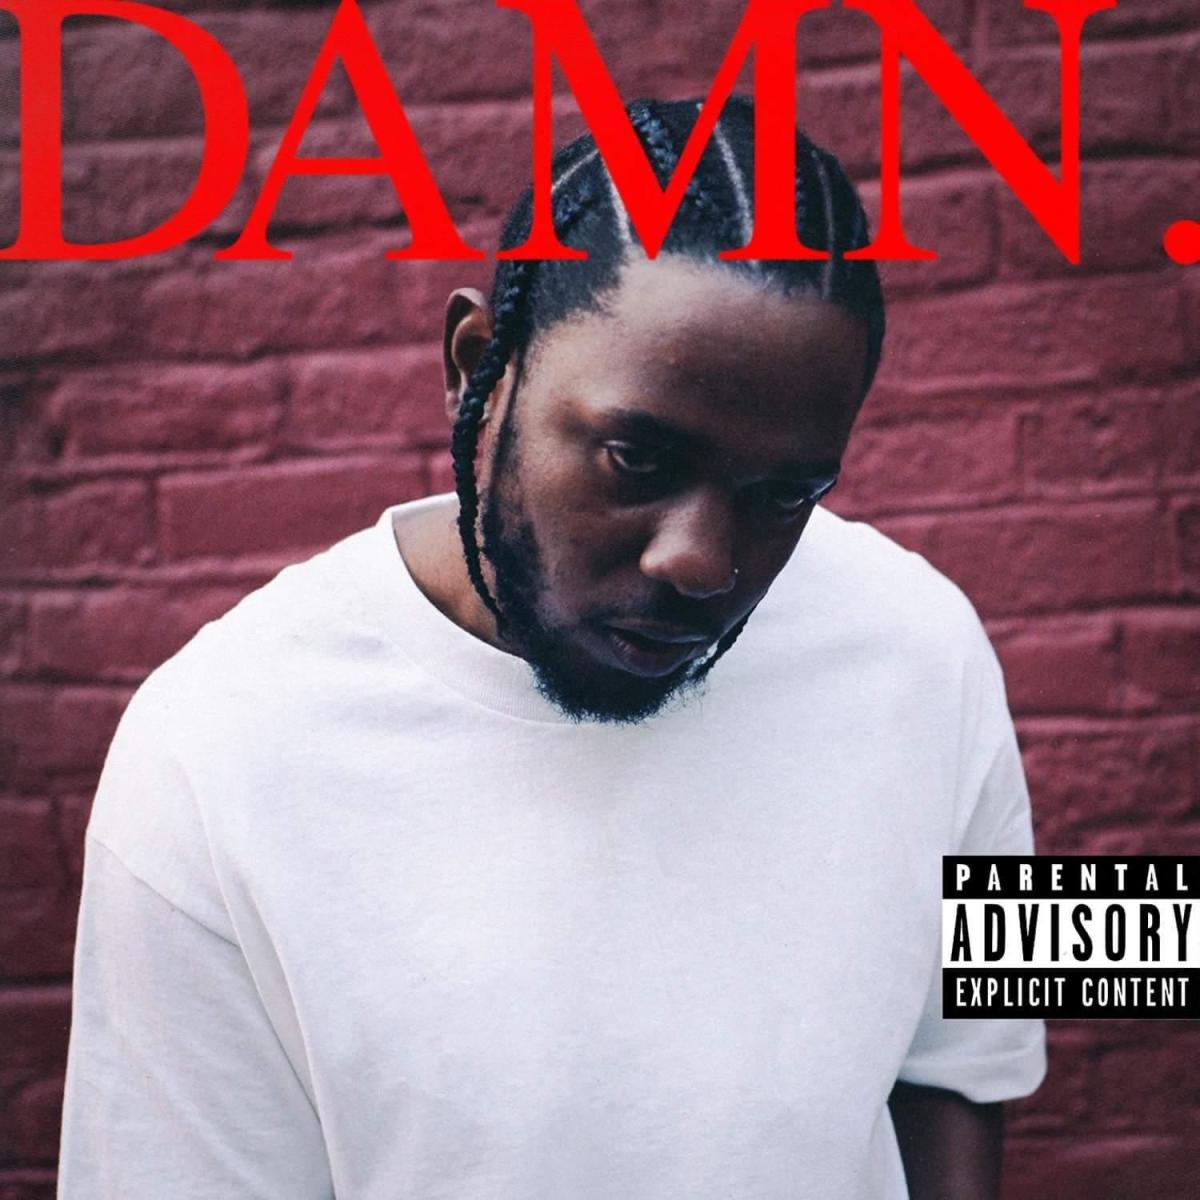 Nešto kao recenzija – Kendrick Lamar ”Damn”